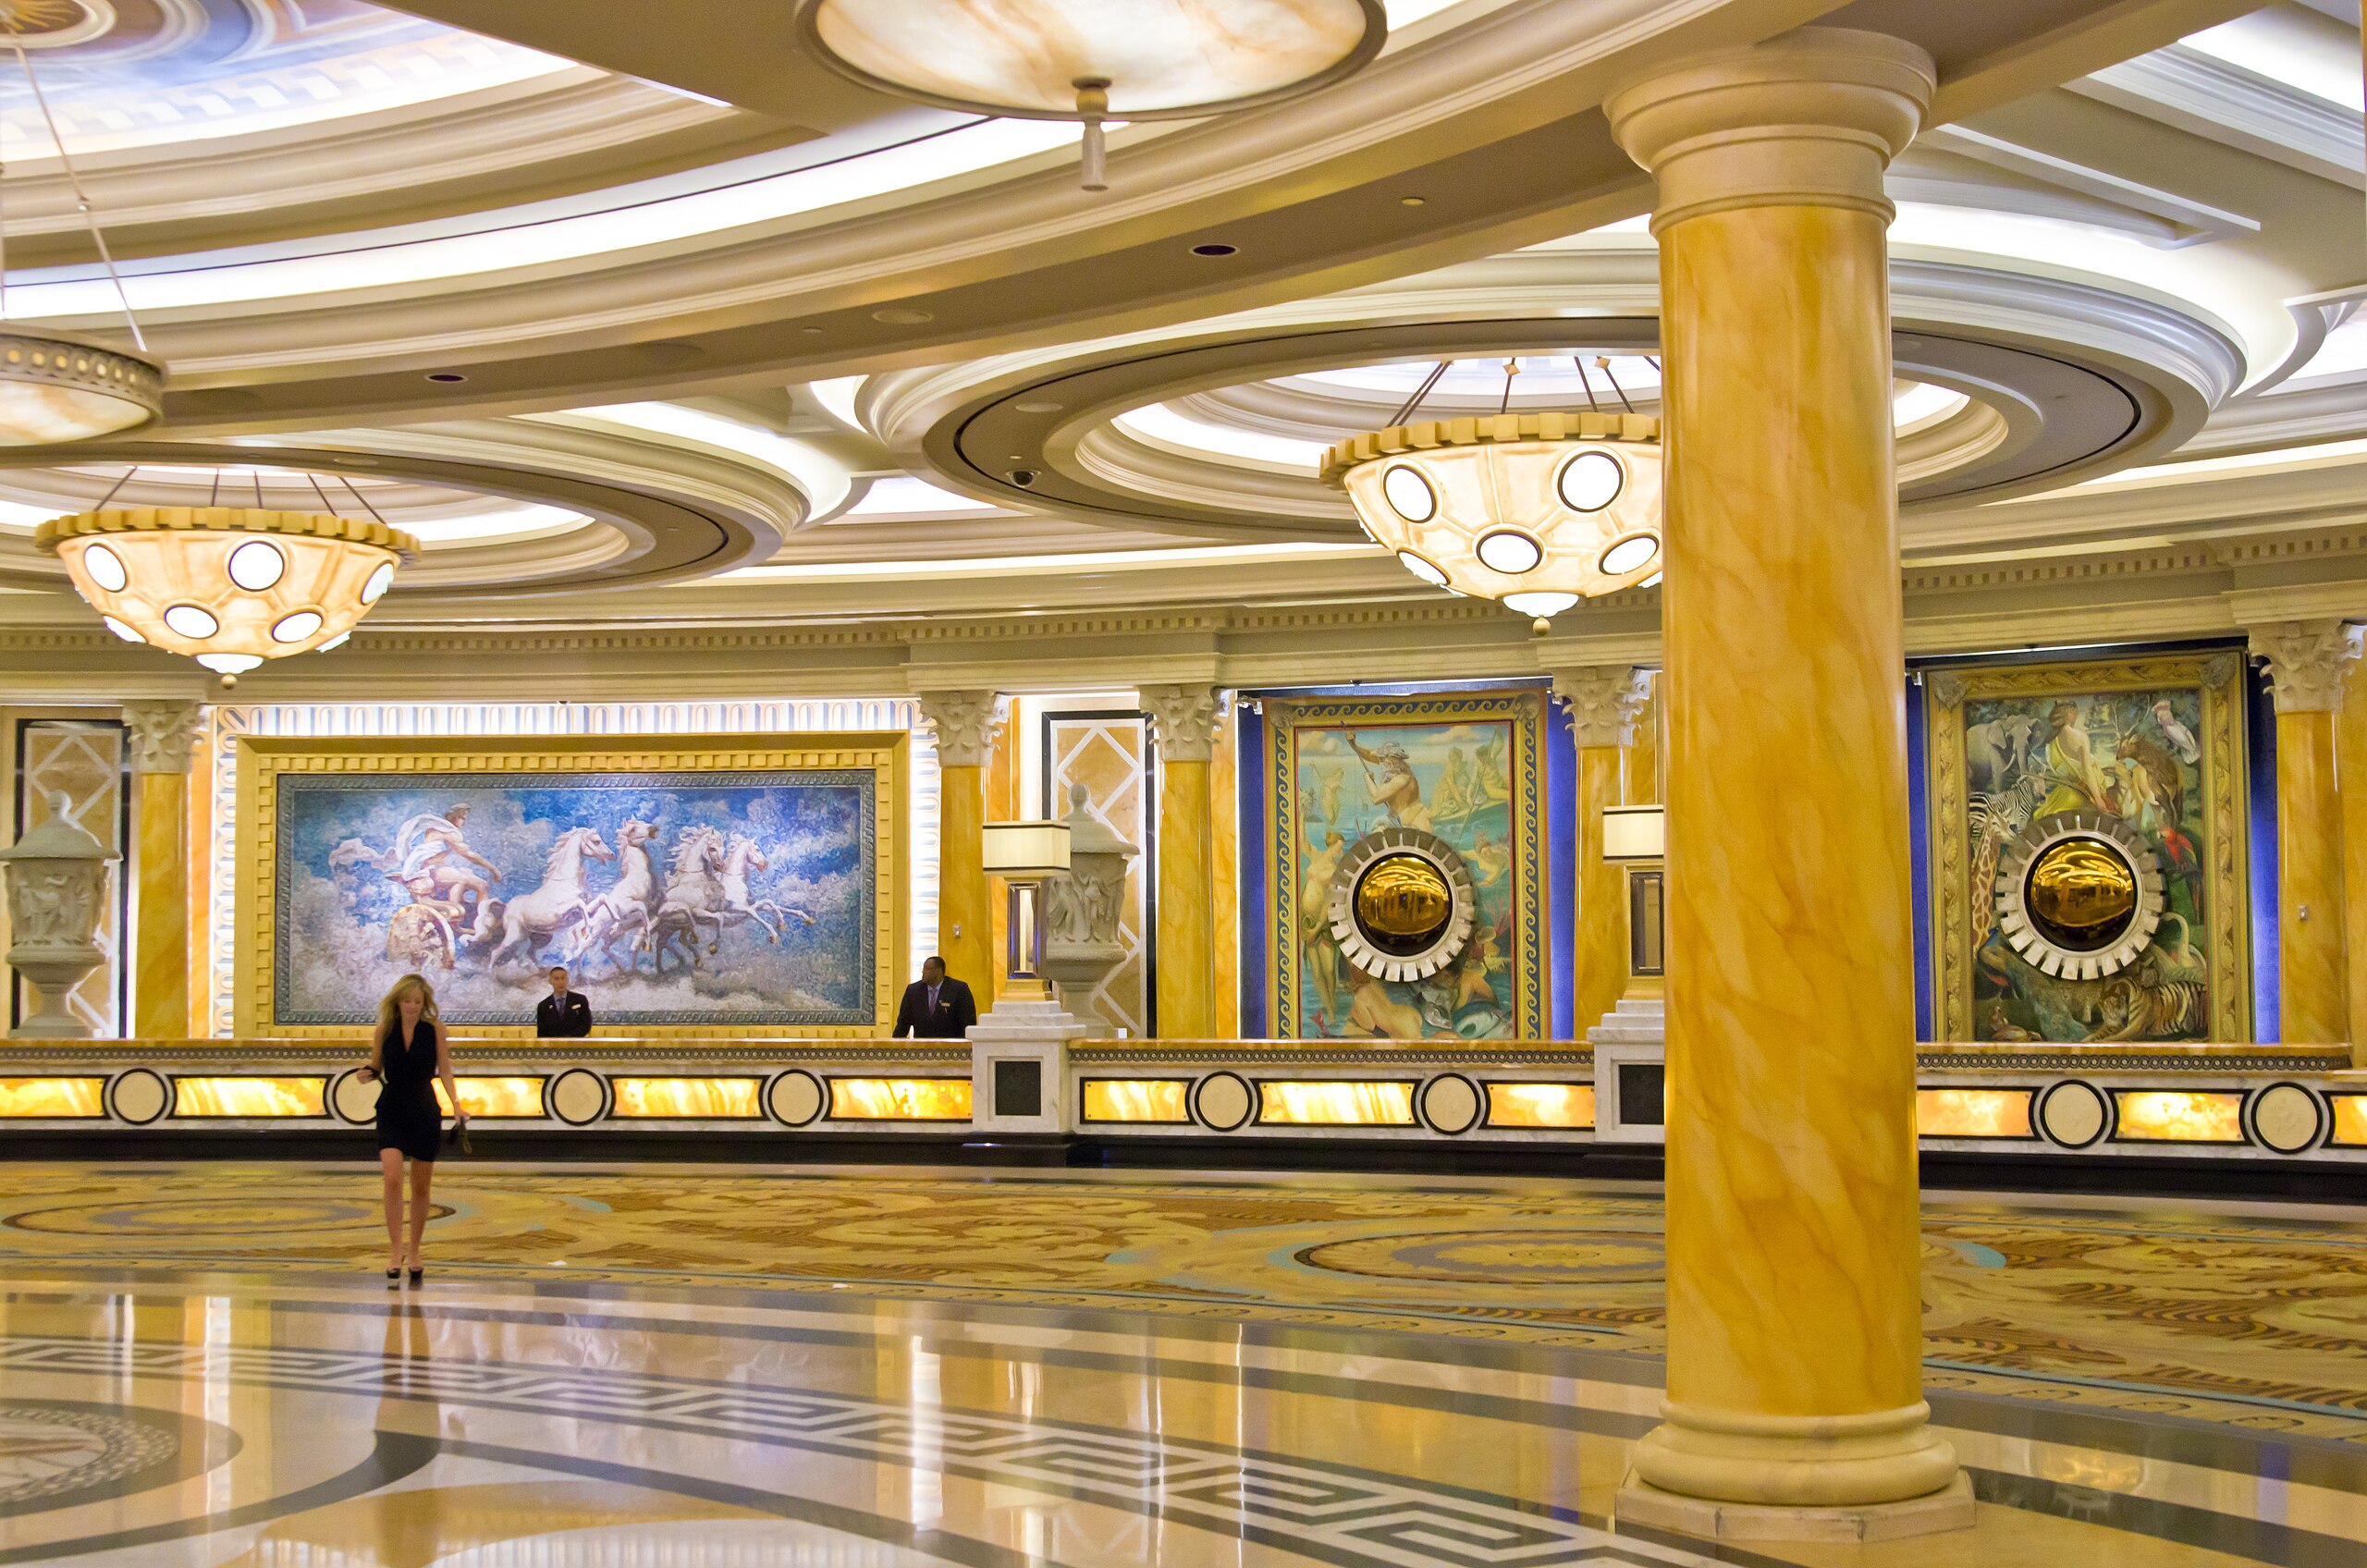 File:Caesars Palace Las Vegas. (39229935724).jpg - Wikimedia Commons